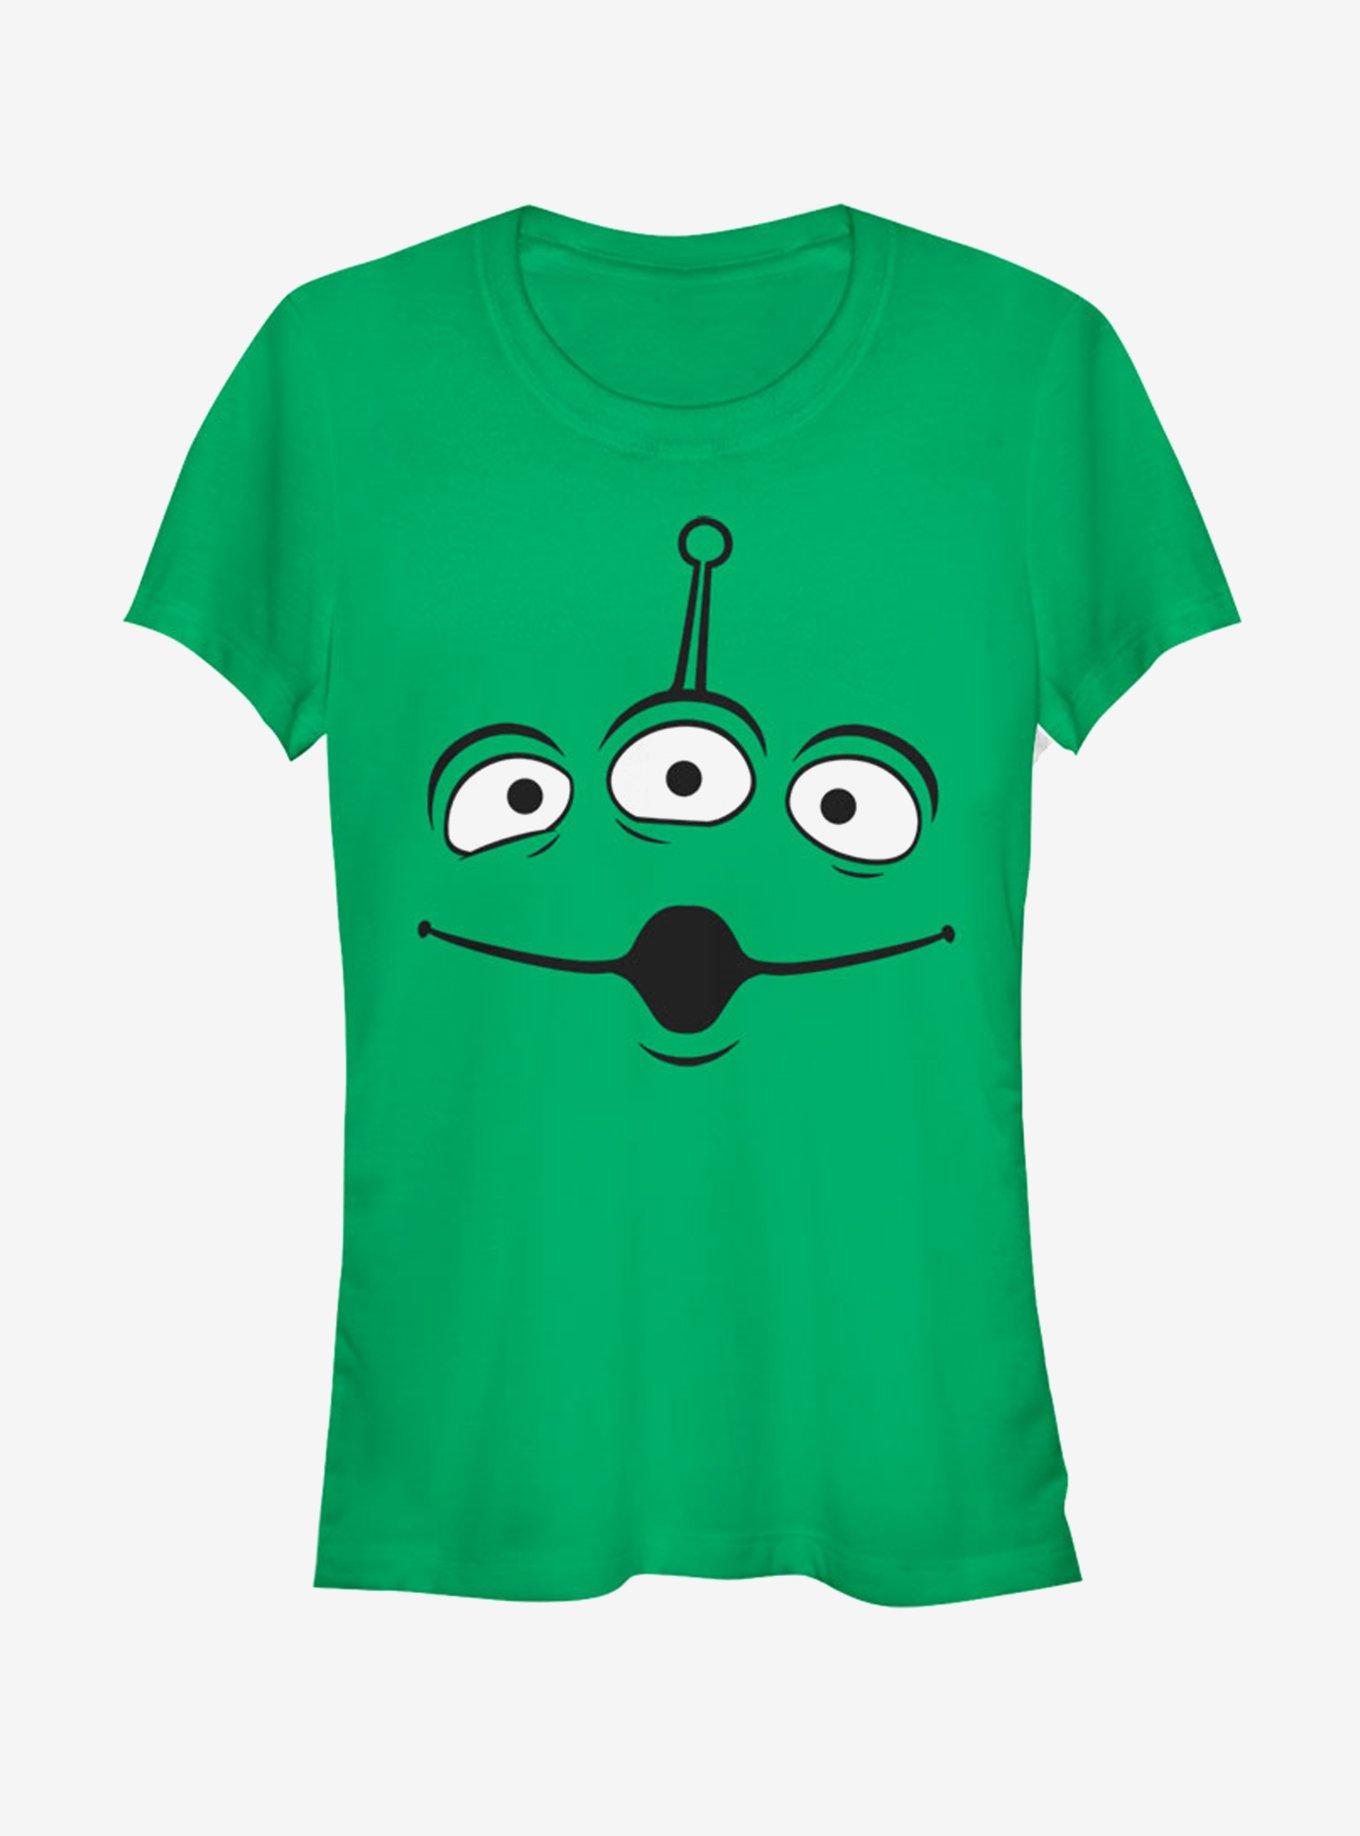 Disney Pixar Toy Story Alien Face Girls T-Shirt